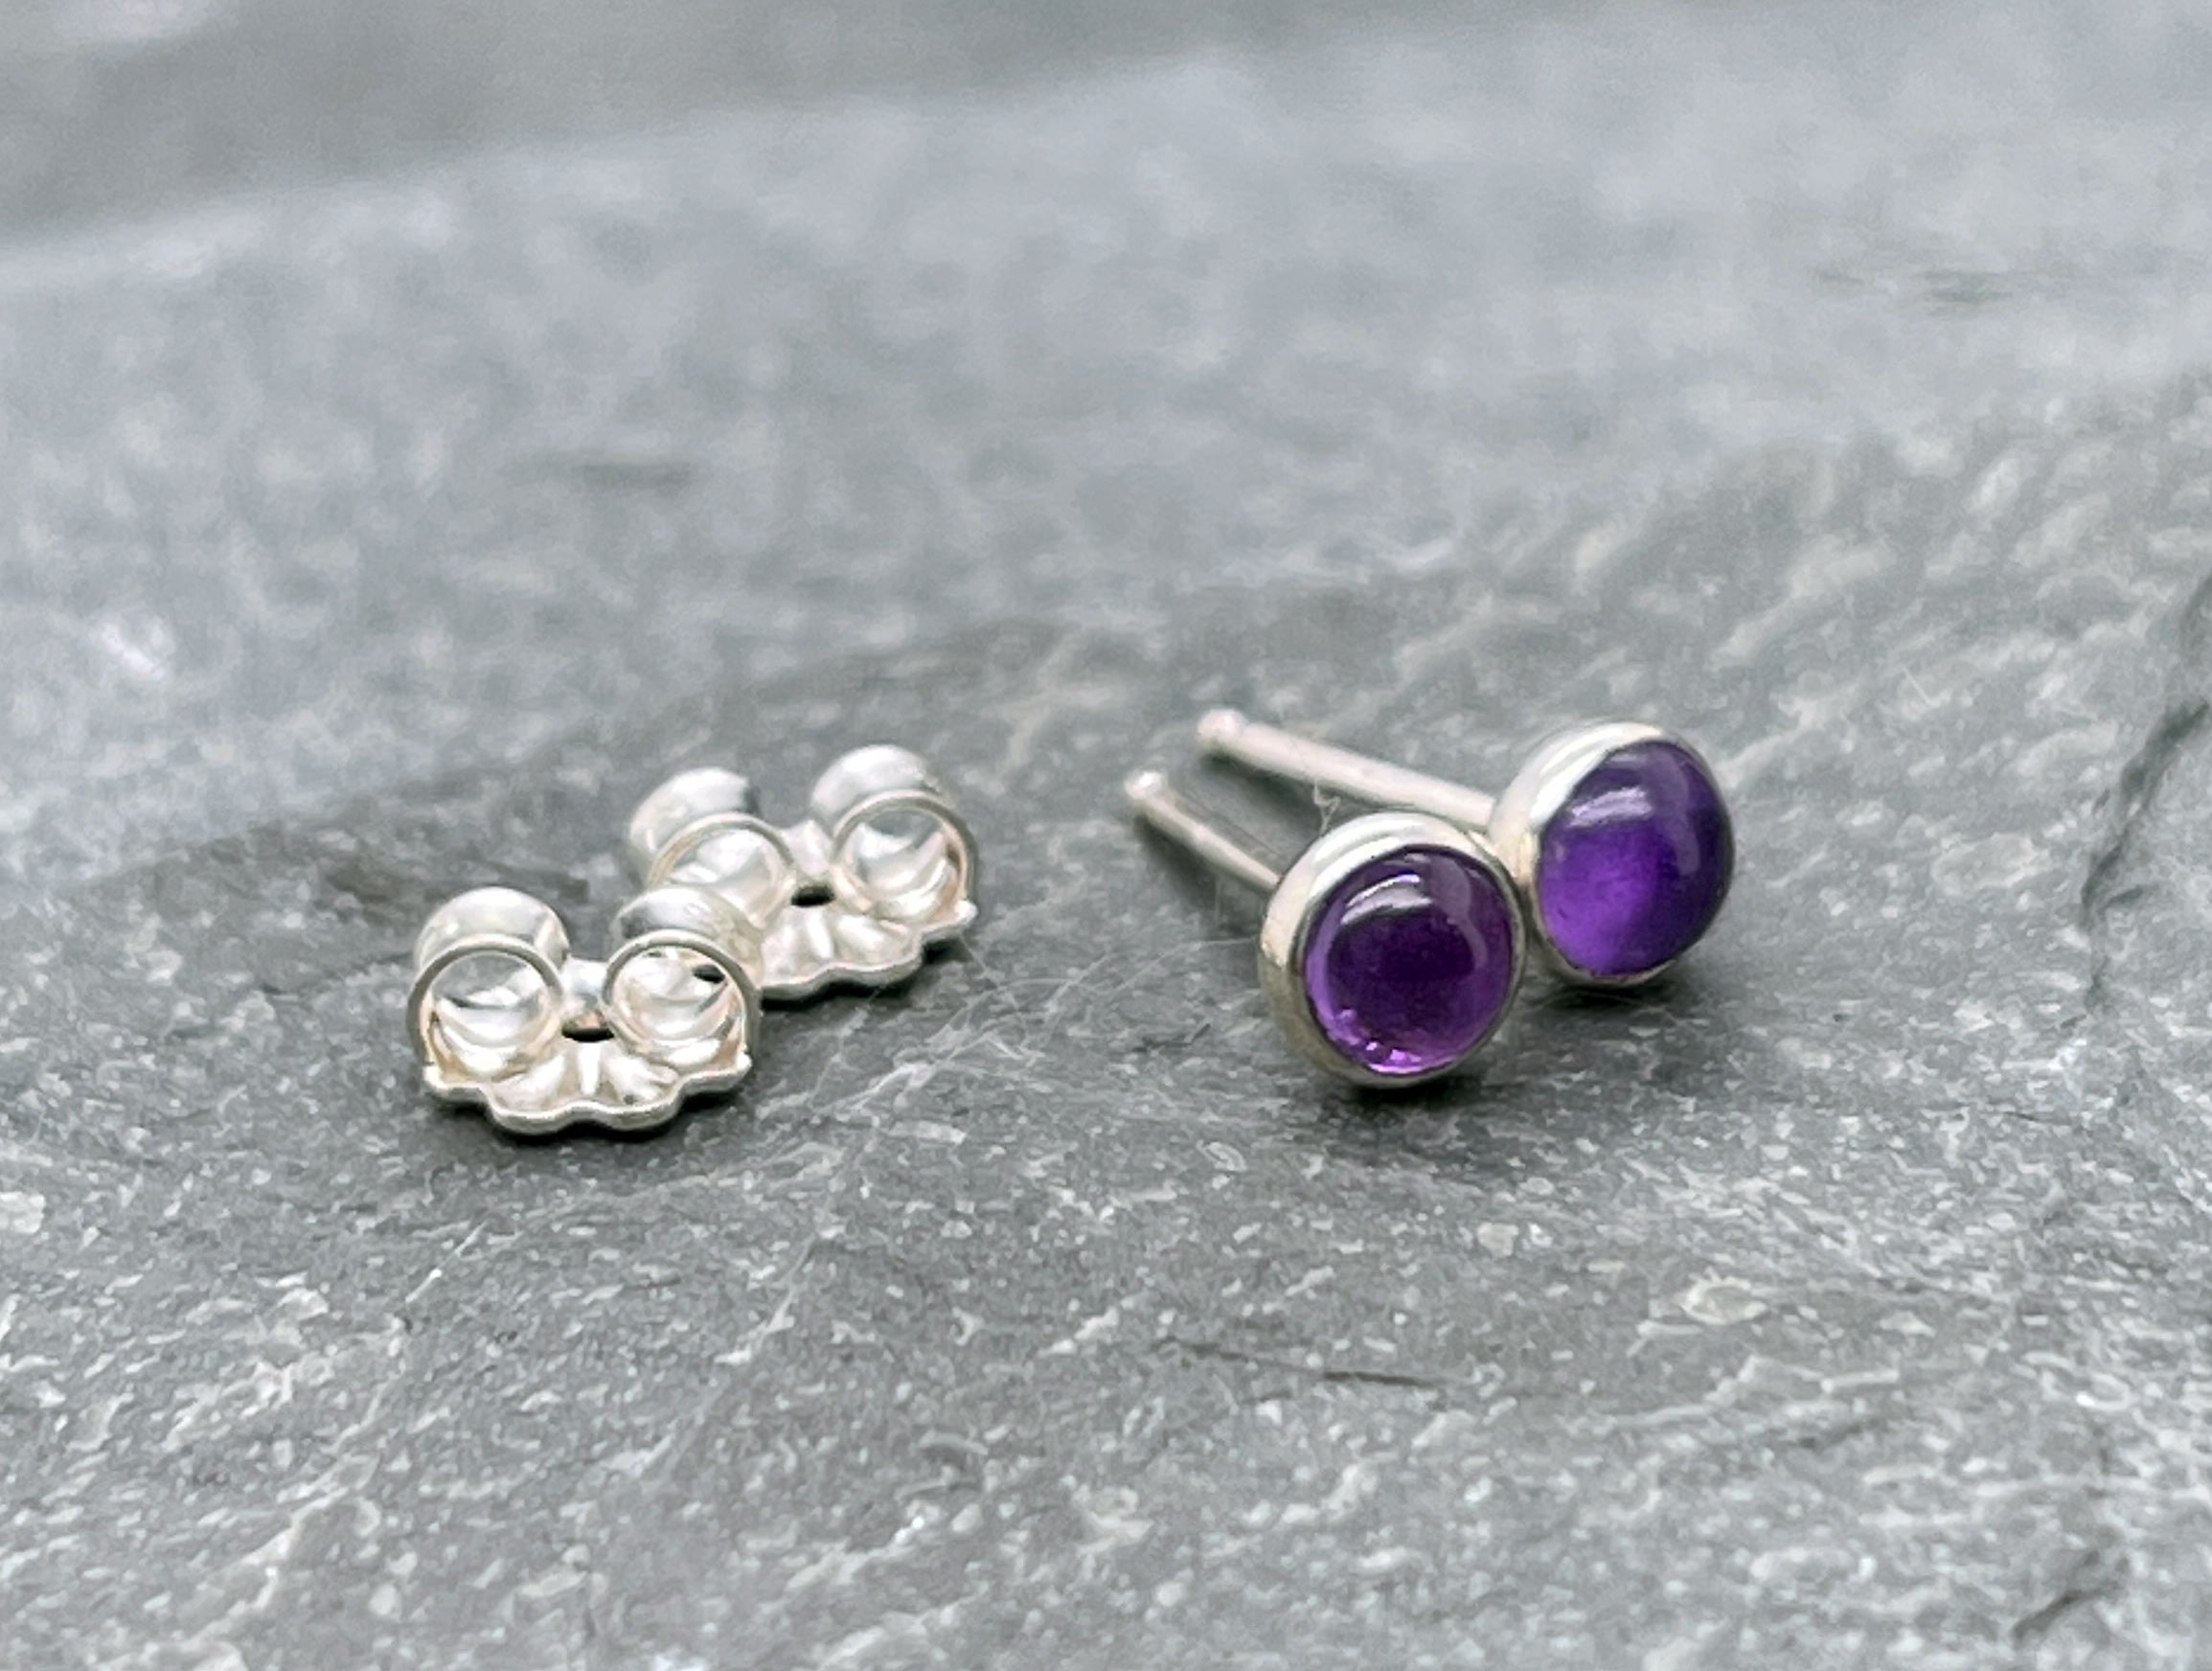 Amethyst Stud Earrings in Sterling Silver, Small Round Gemstone Stud Earrings, Silver Stud Earrings, Purple Gemstone Studs, Gift for Her